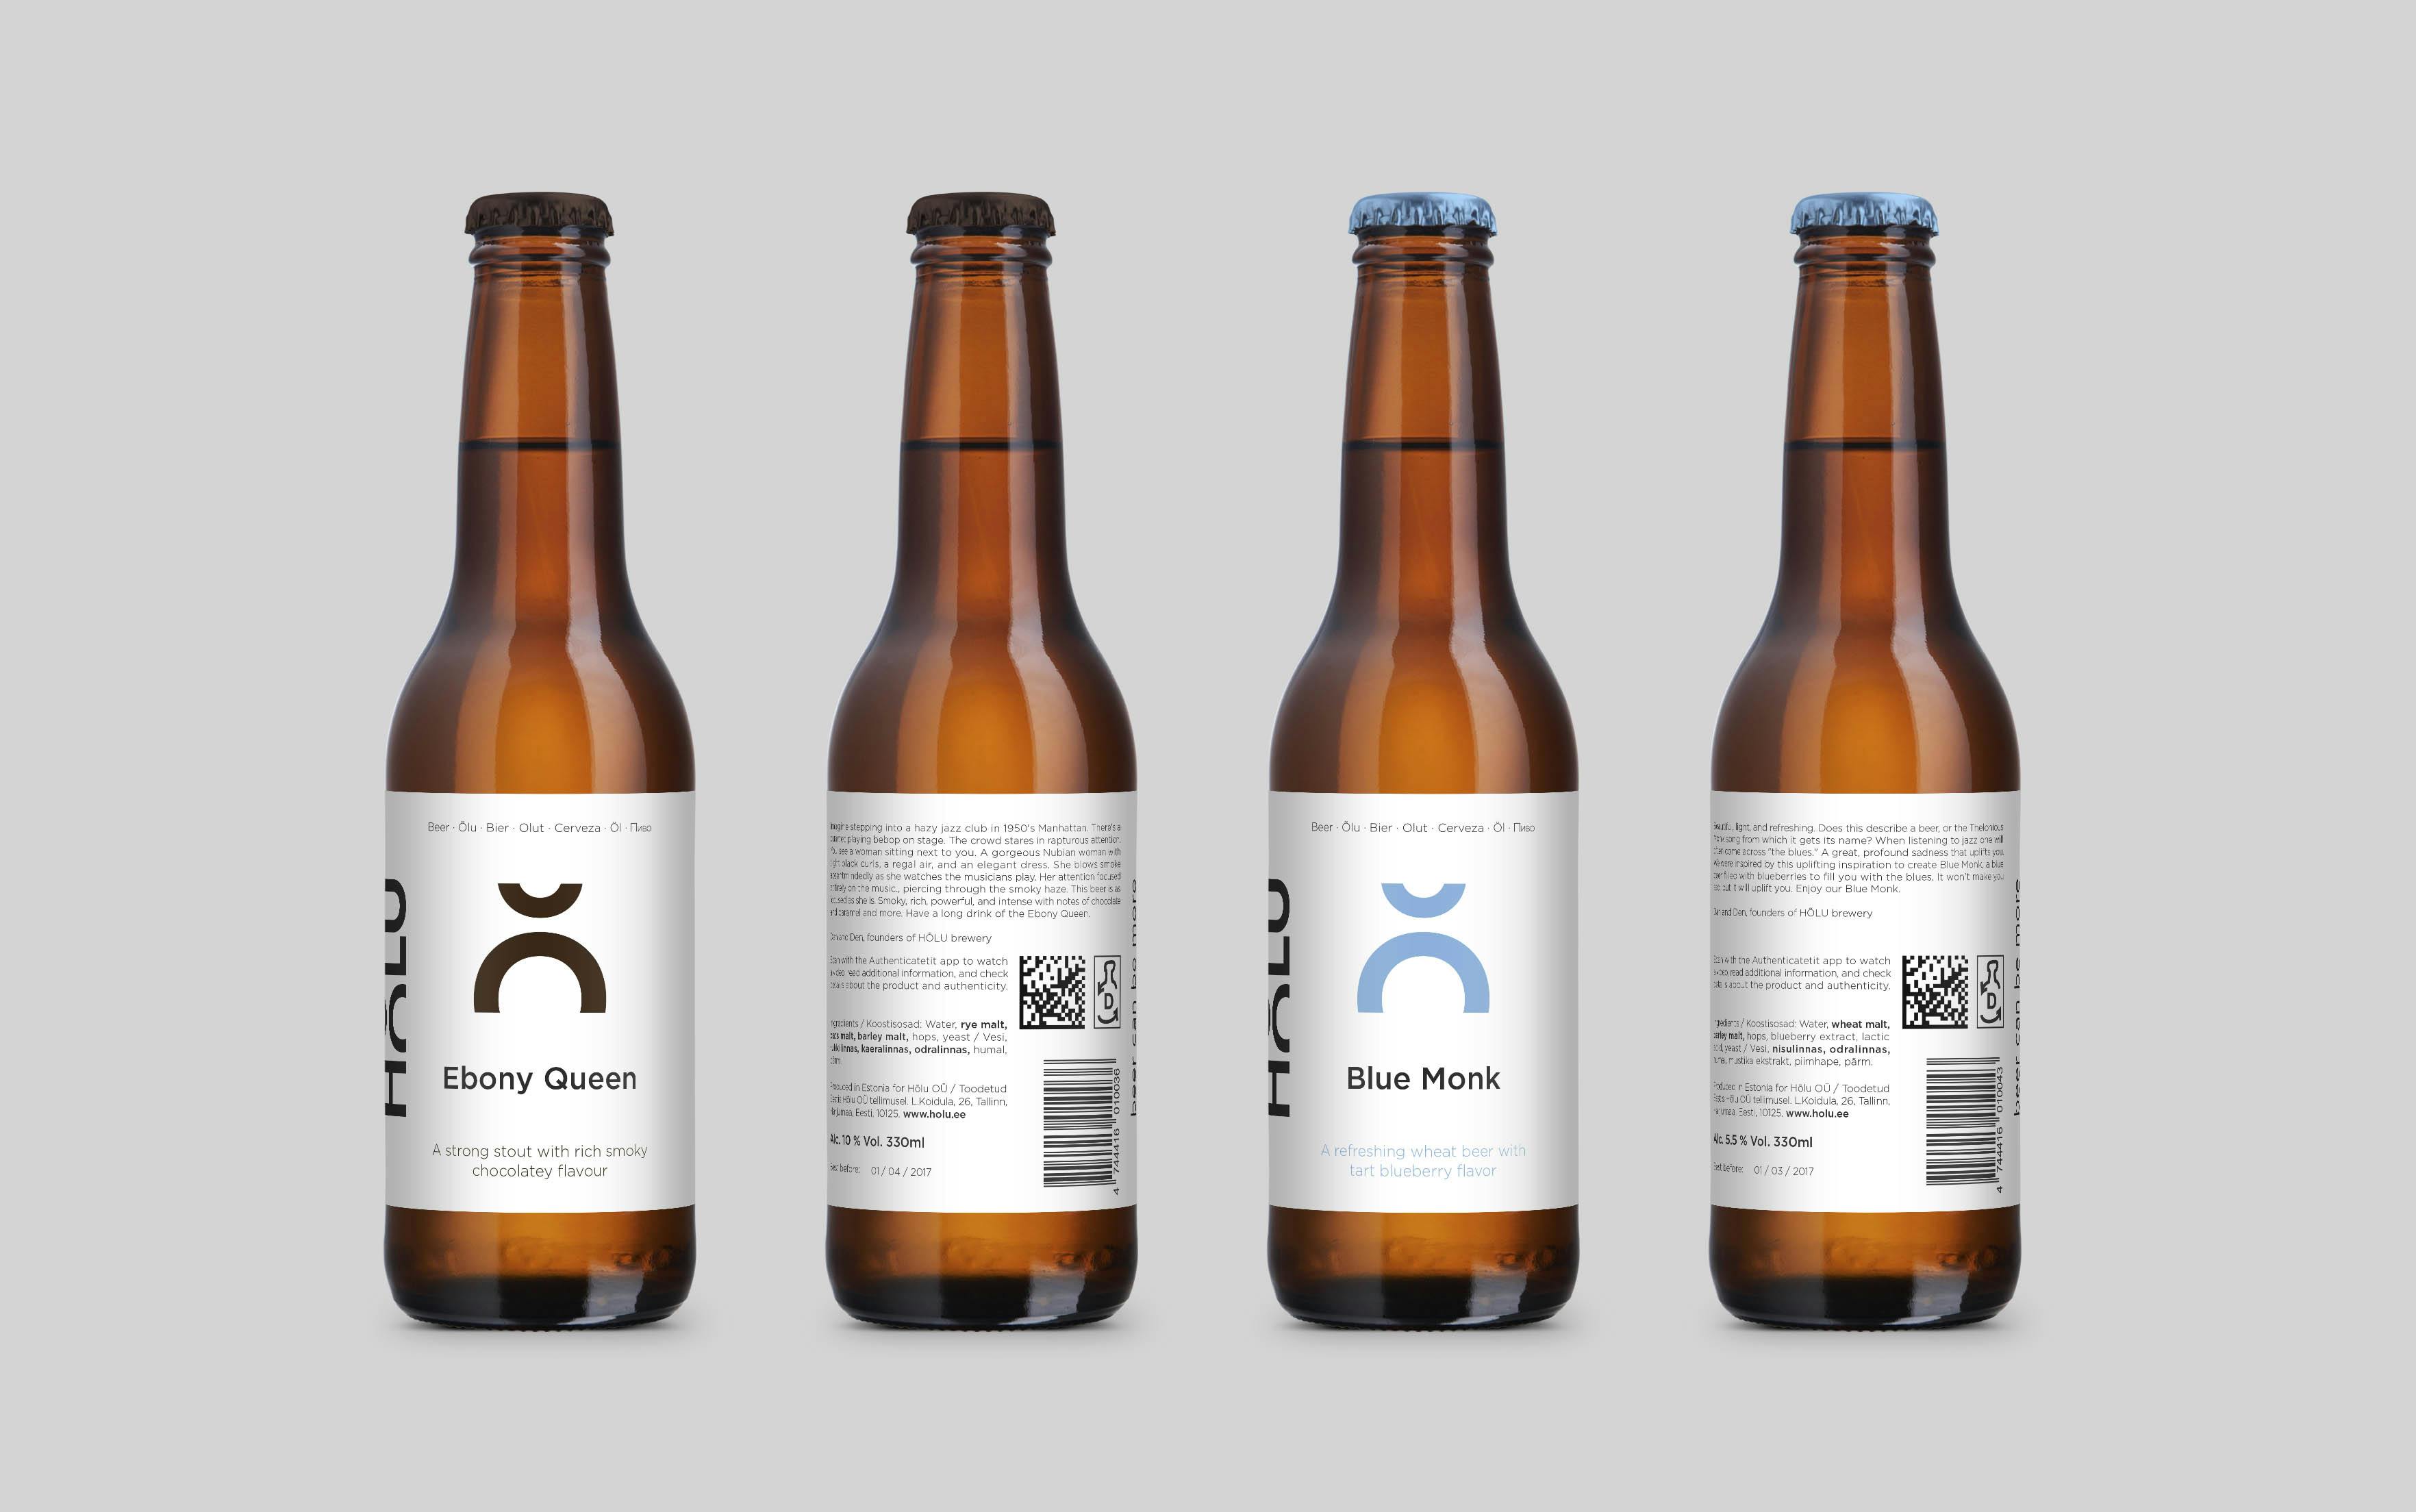 https://site.no11.ee/wp-content/uploads/2018/03/No11_Hõlu_beer-bottle-packaging-design-2-1.jpg